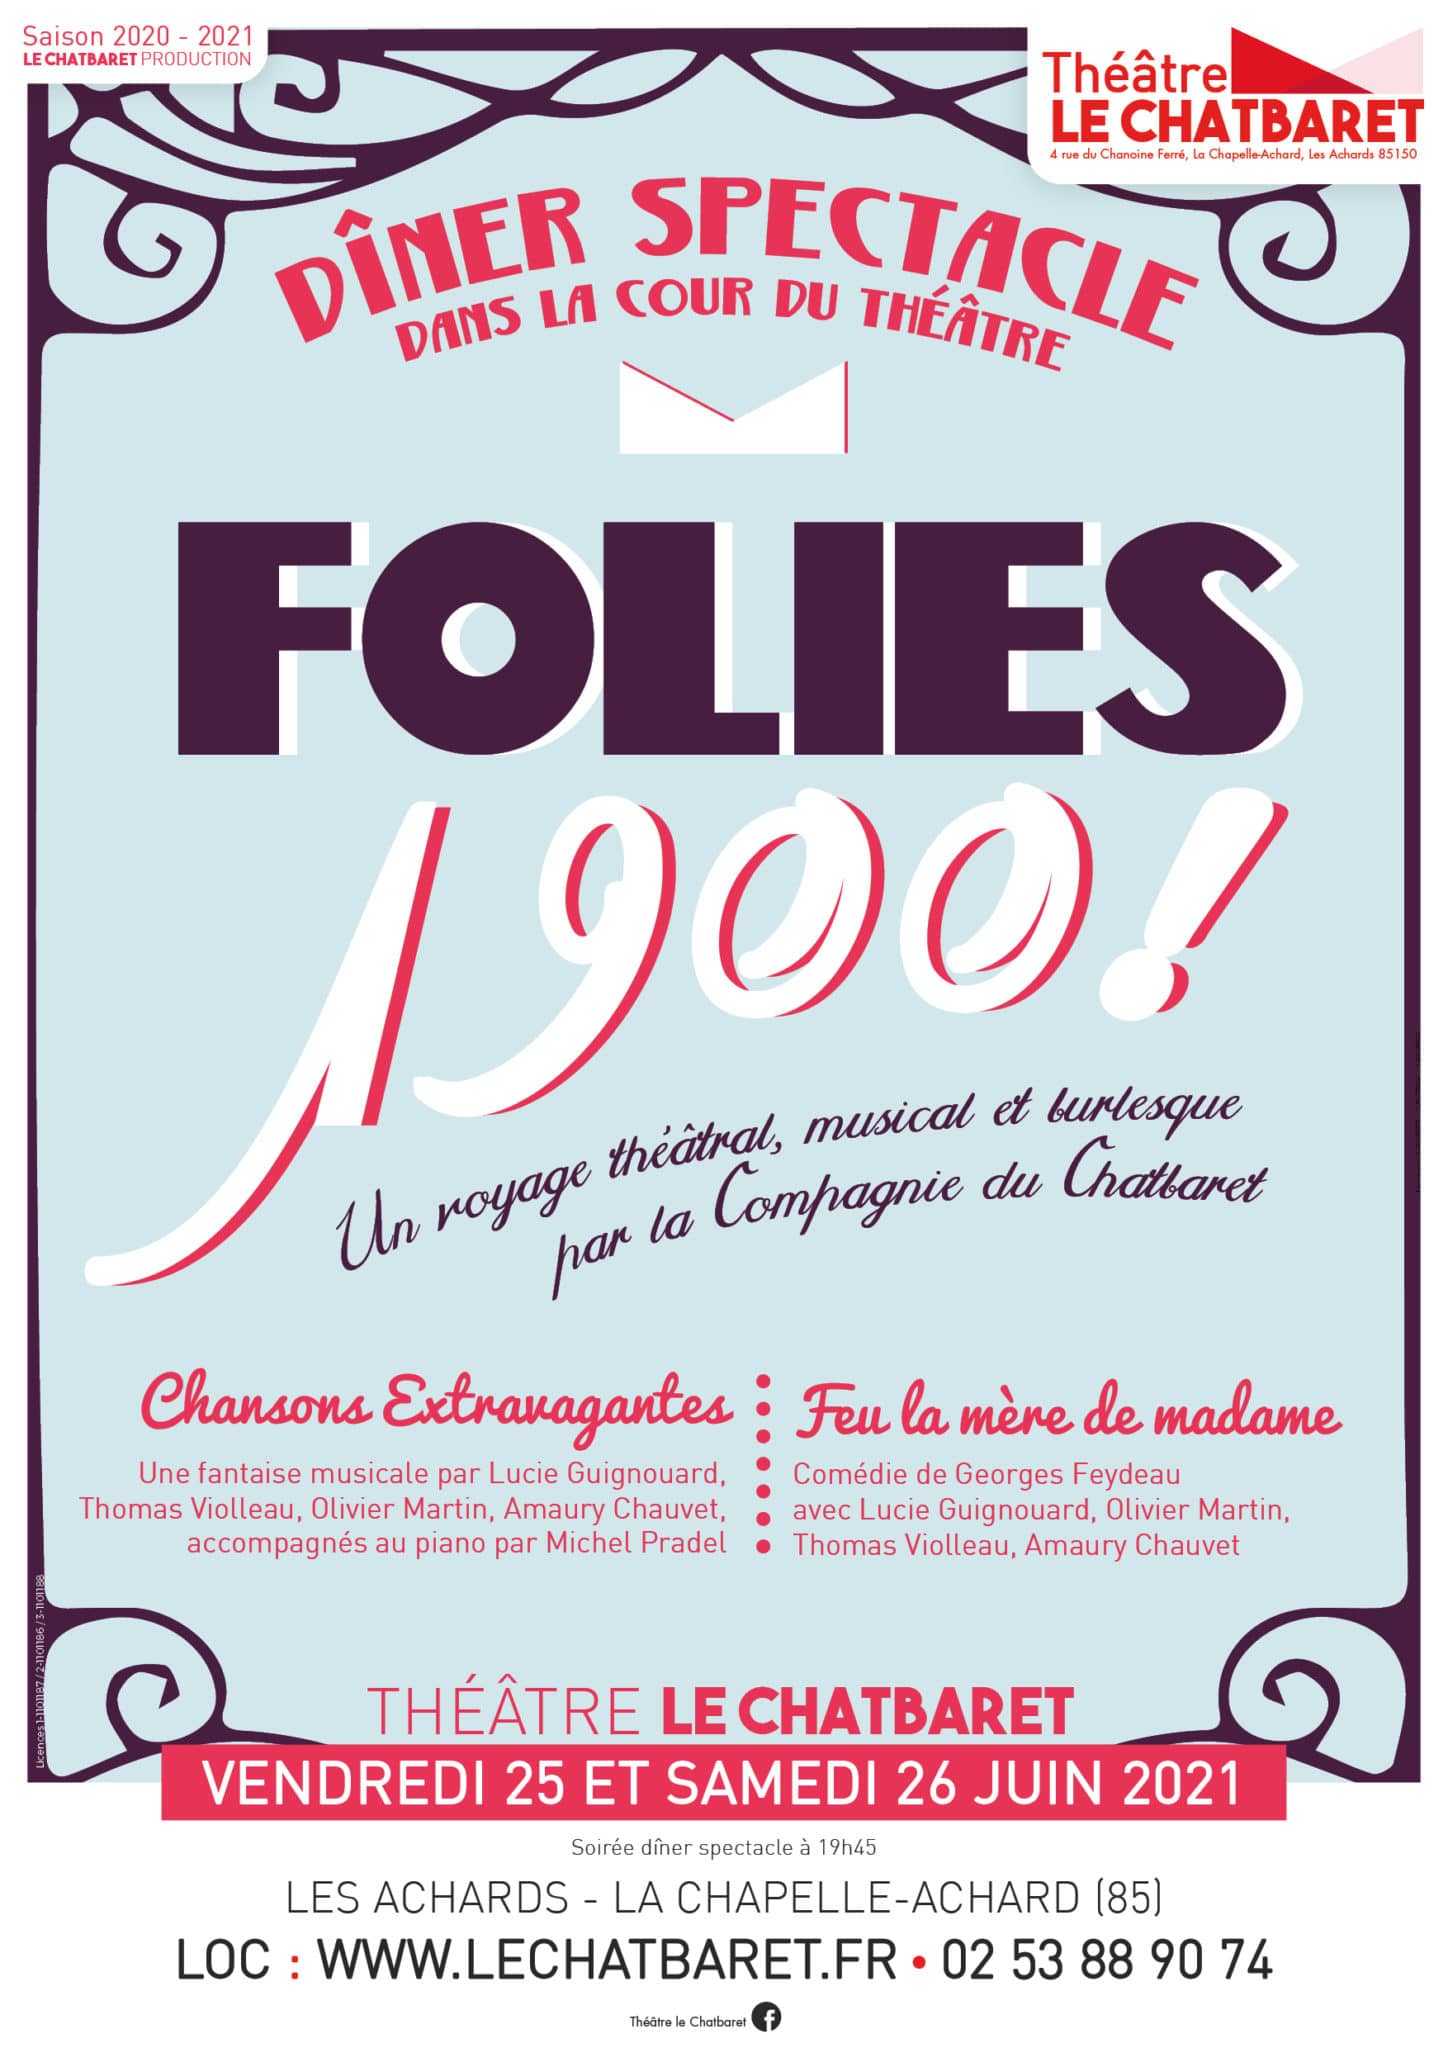 folies-1900-2020-2021-chatbaret